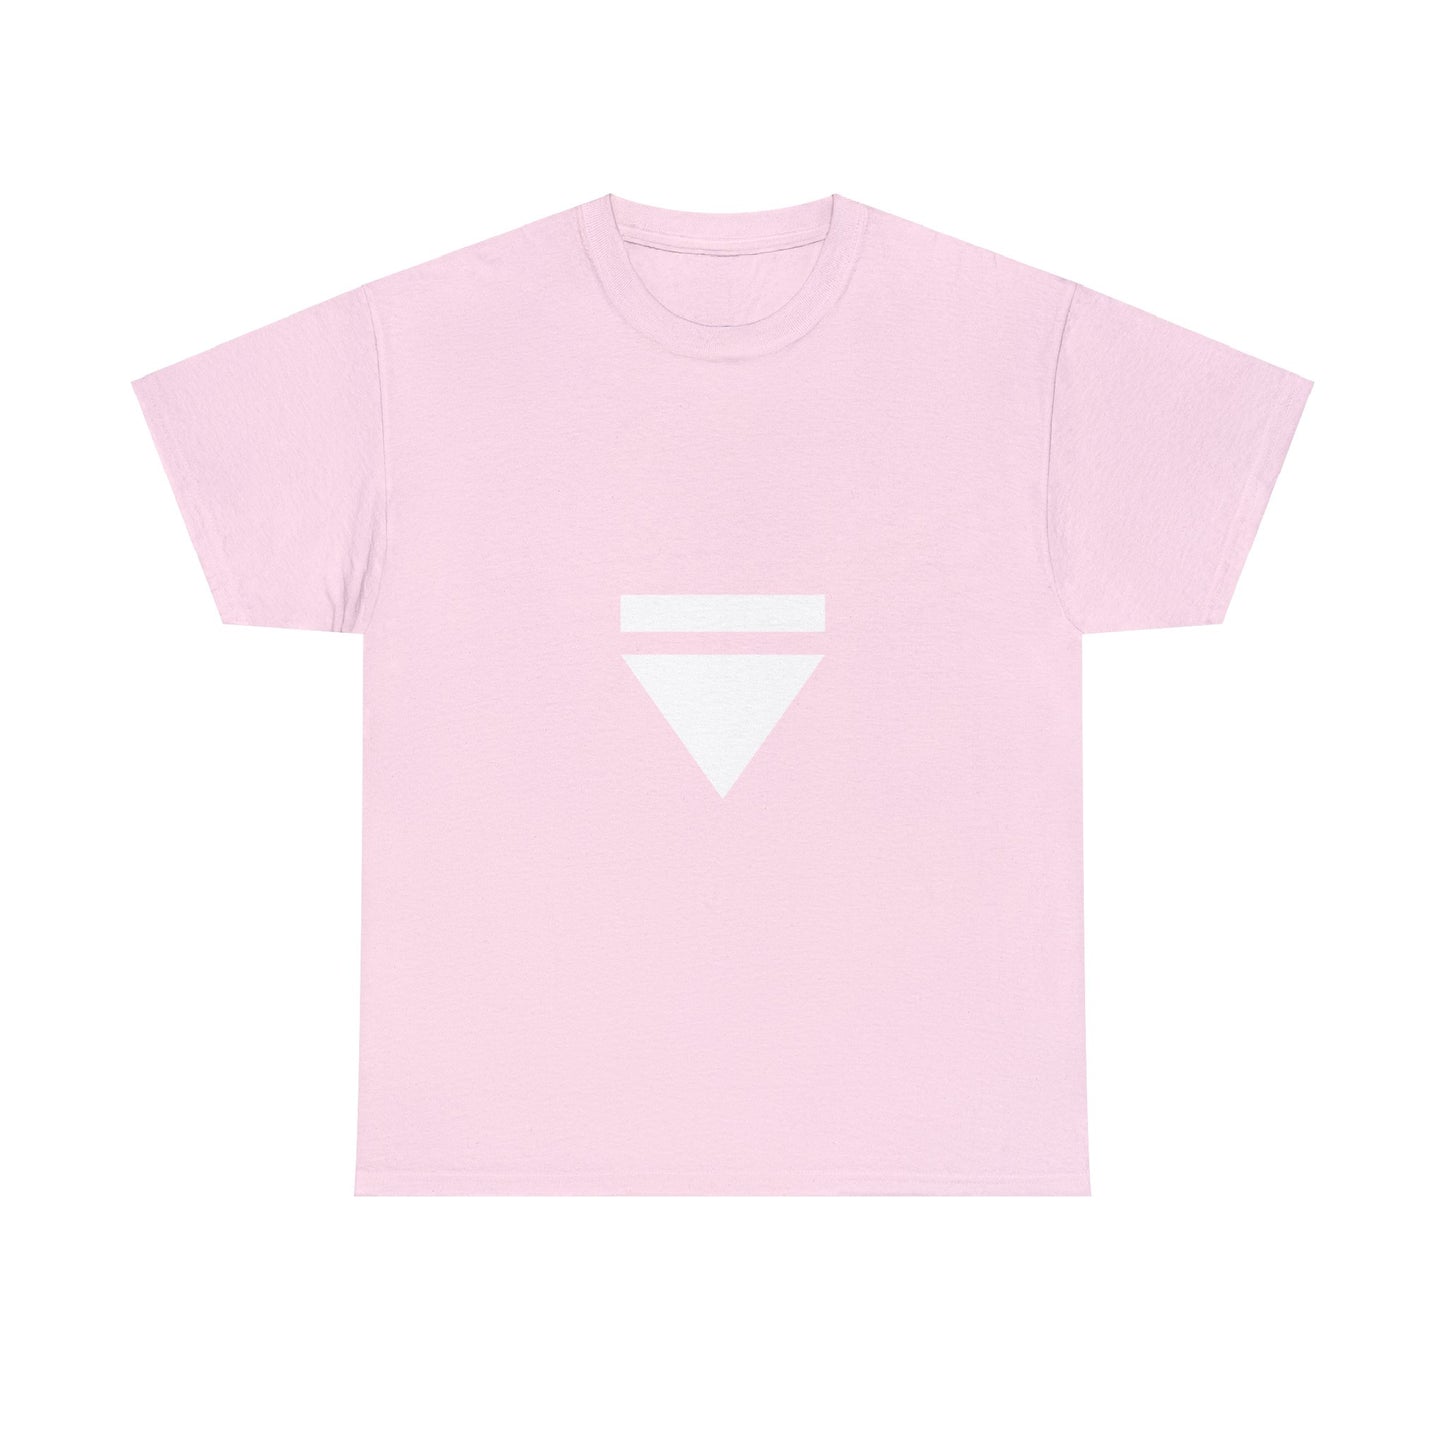 Newer Symbols Tom Vek USA pink T-shirt